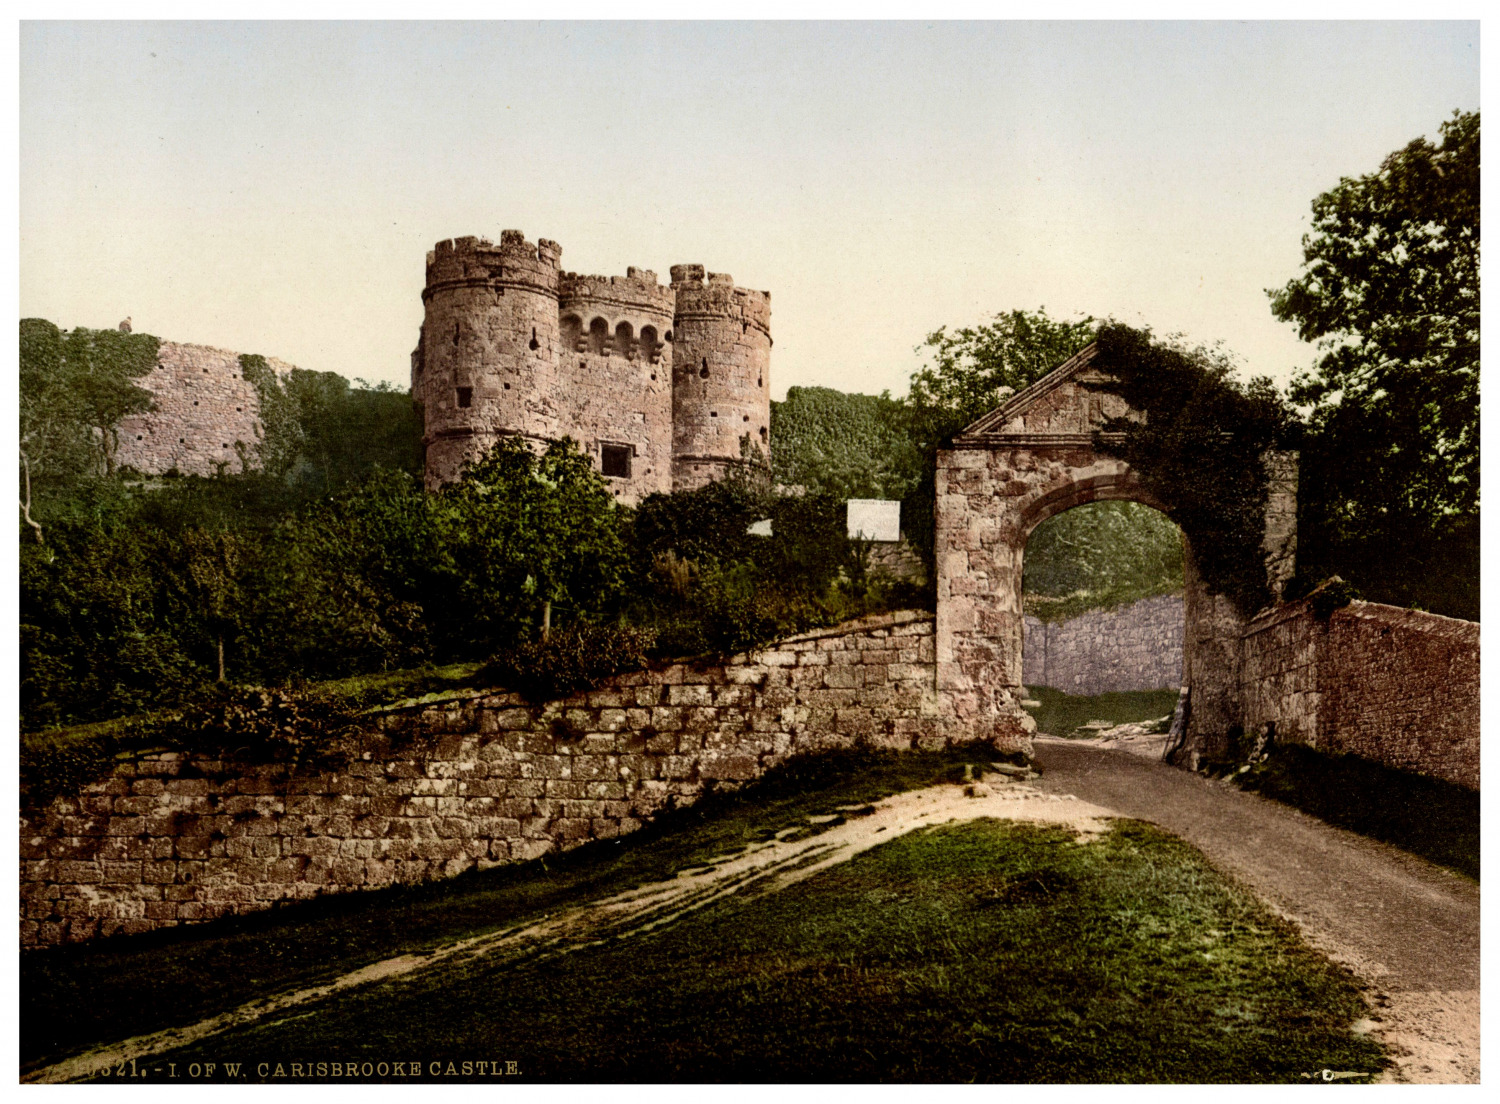 Isle of Wight. Carisbrooke, the Castle. Vintage Photochrome by P.Z, Photochrome Zu